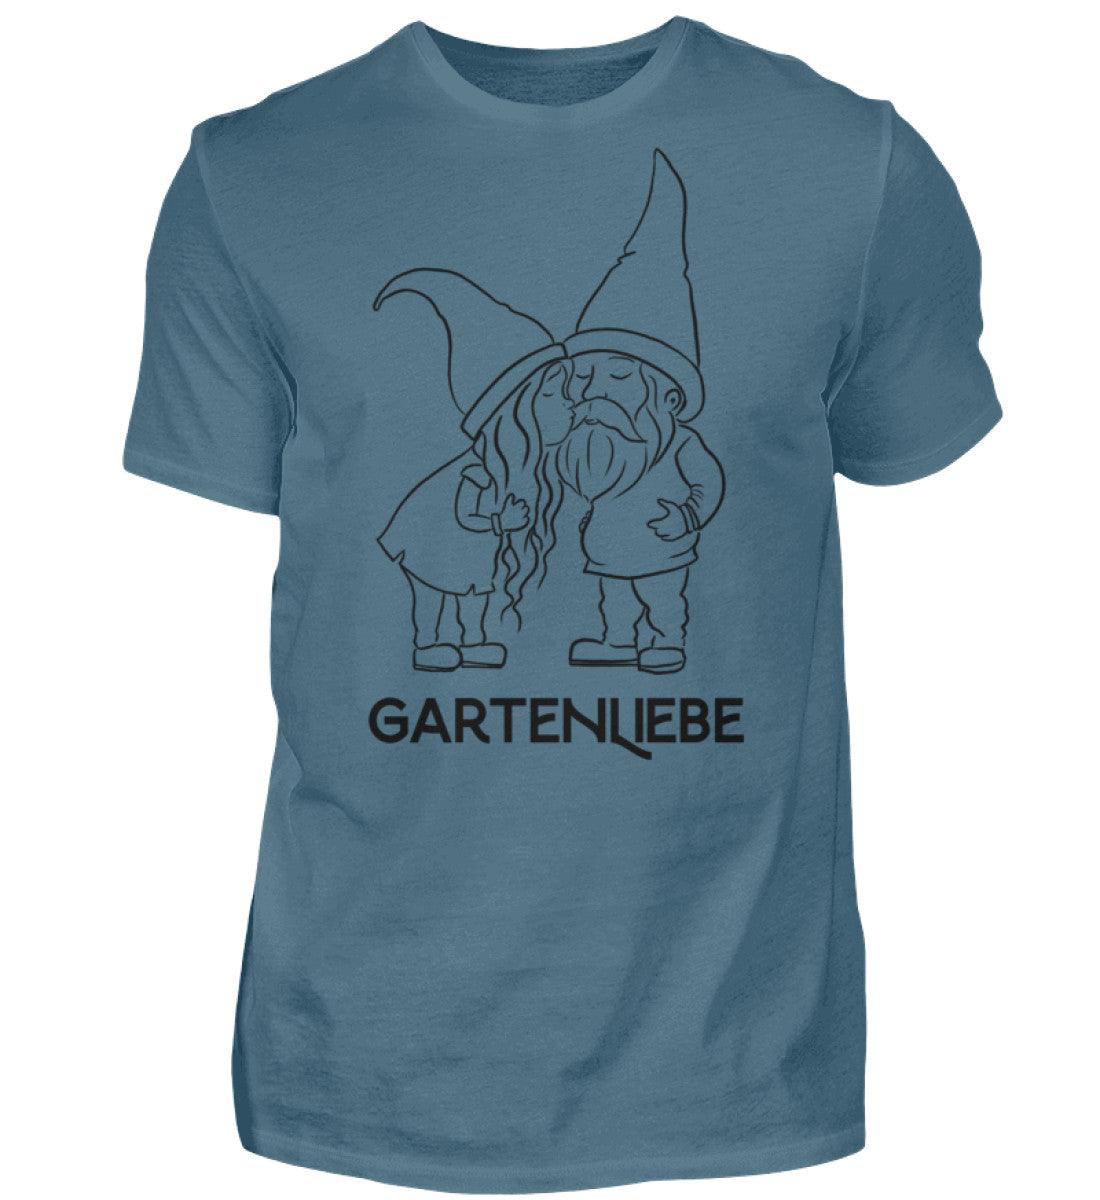 Gartenliebe - Unisex Shirt - PflanzenFan